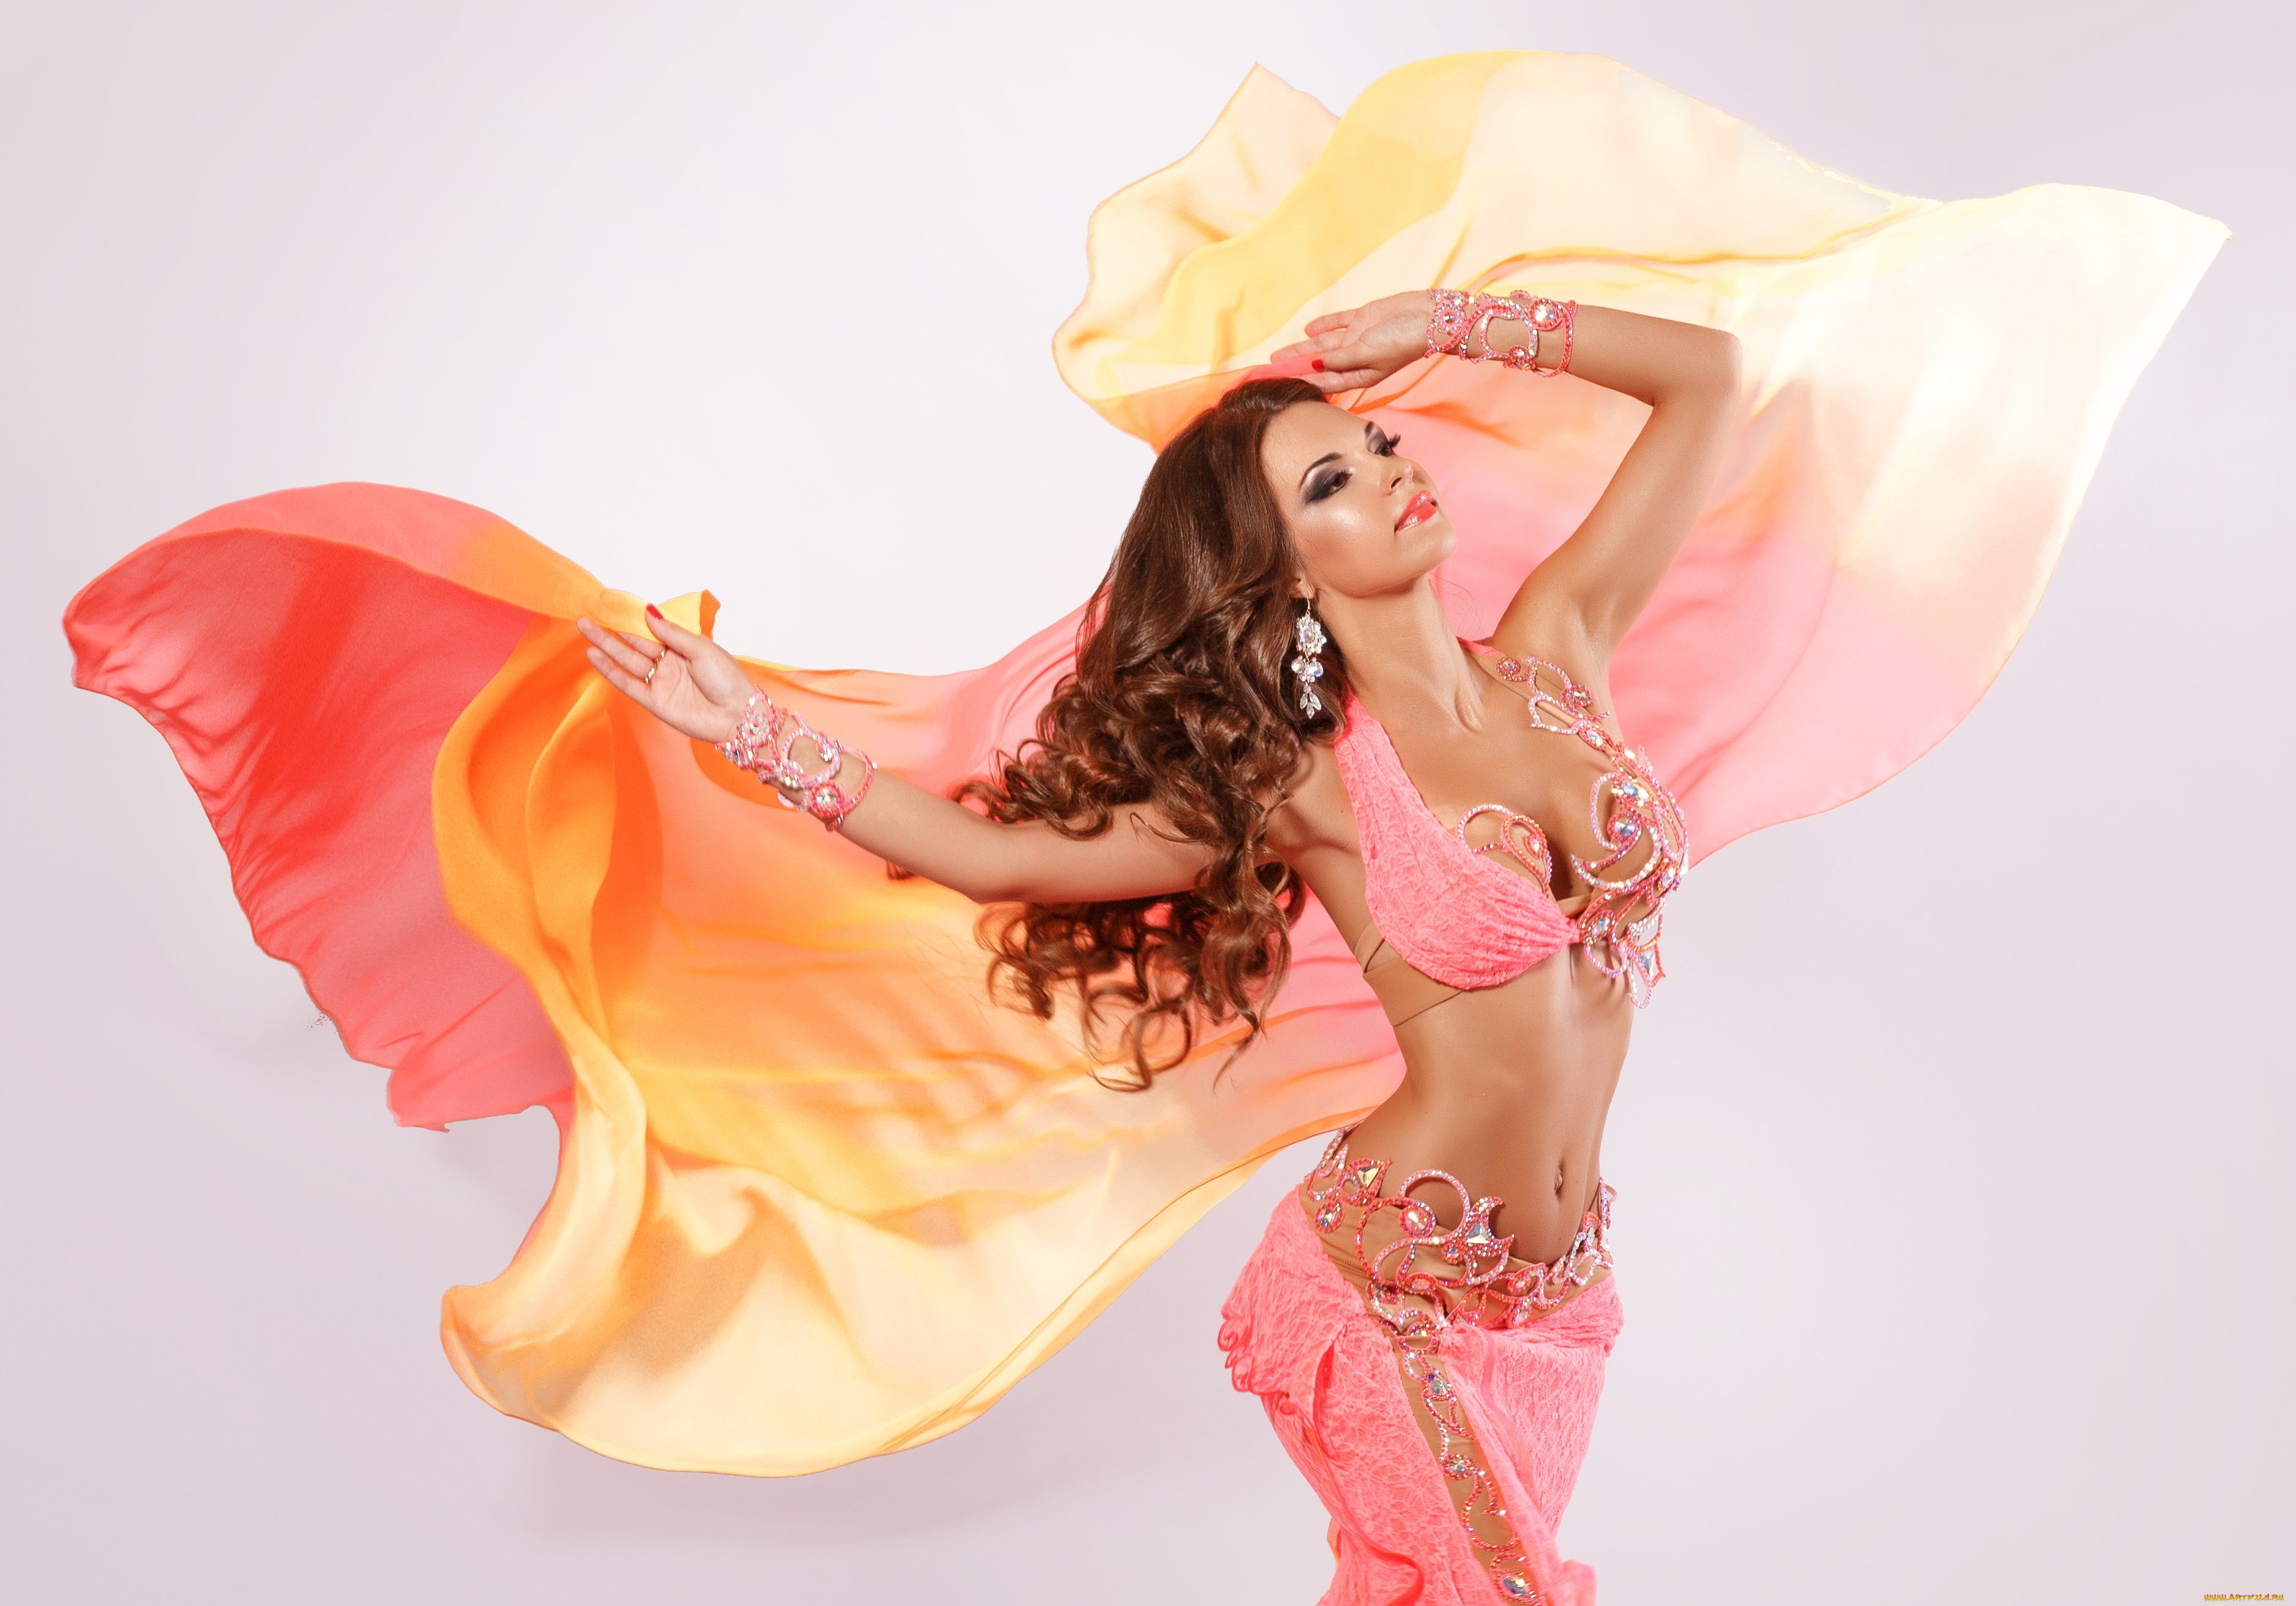 Belly dancer mp3. Танцовщица беллиданс турчанка. Бэлли дэнсер. Шахразад беллиданс.